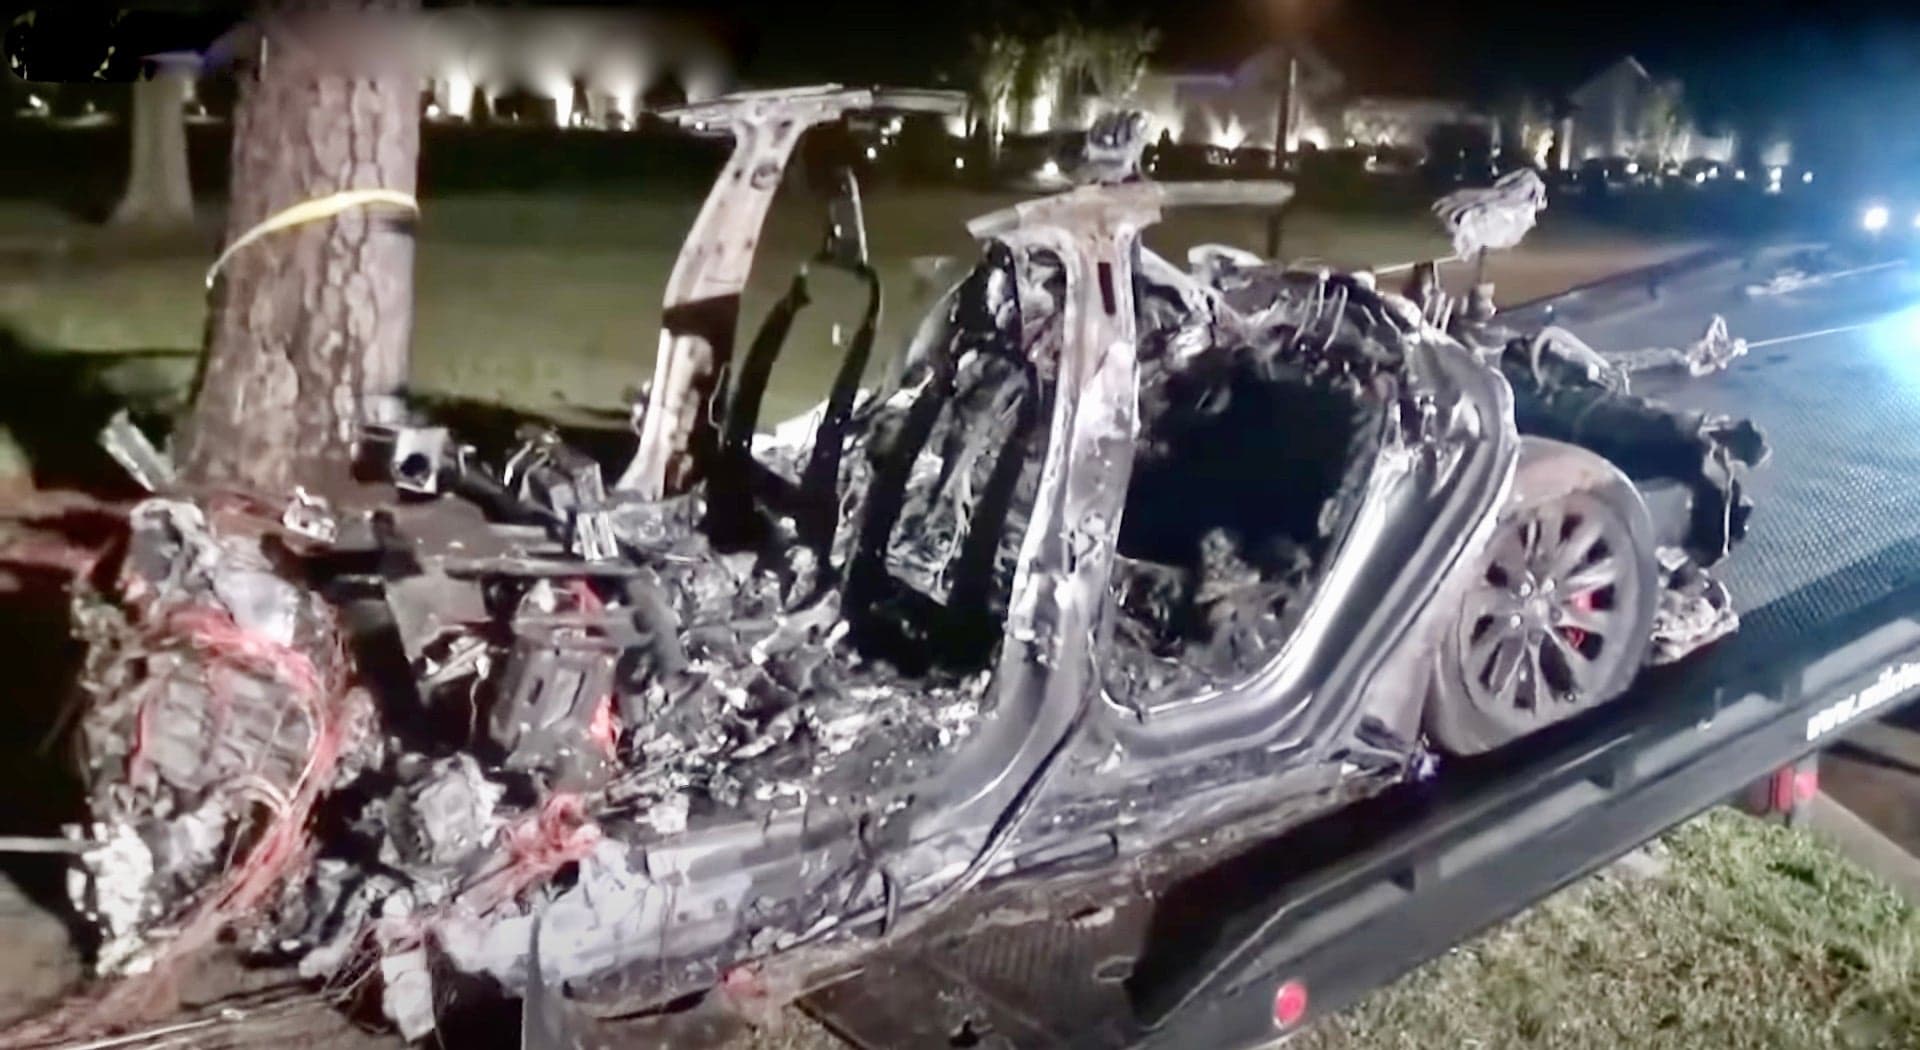 Investigators ‘100 Percent Sure’ No One Was in the Driver’s Seat in Fatal Tesla Crash